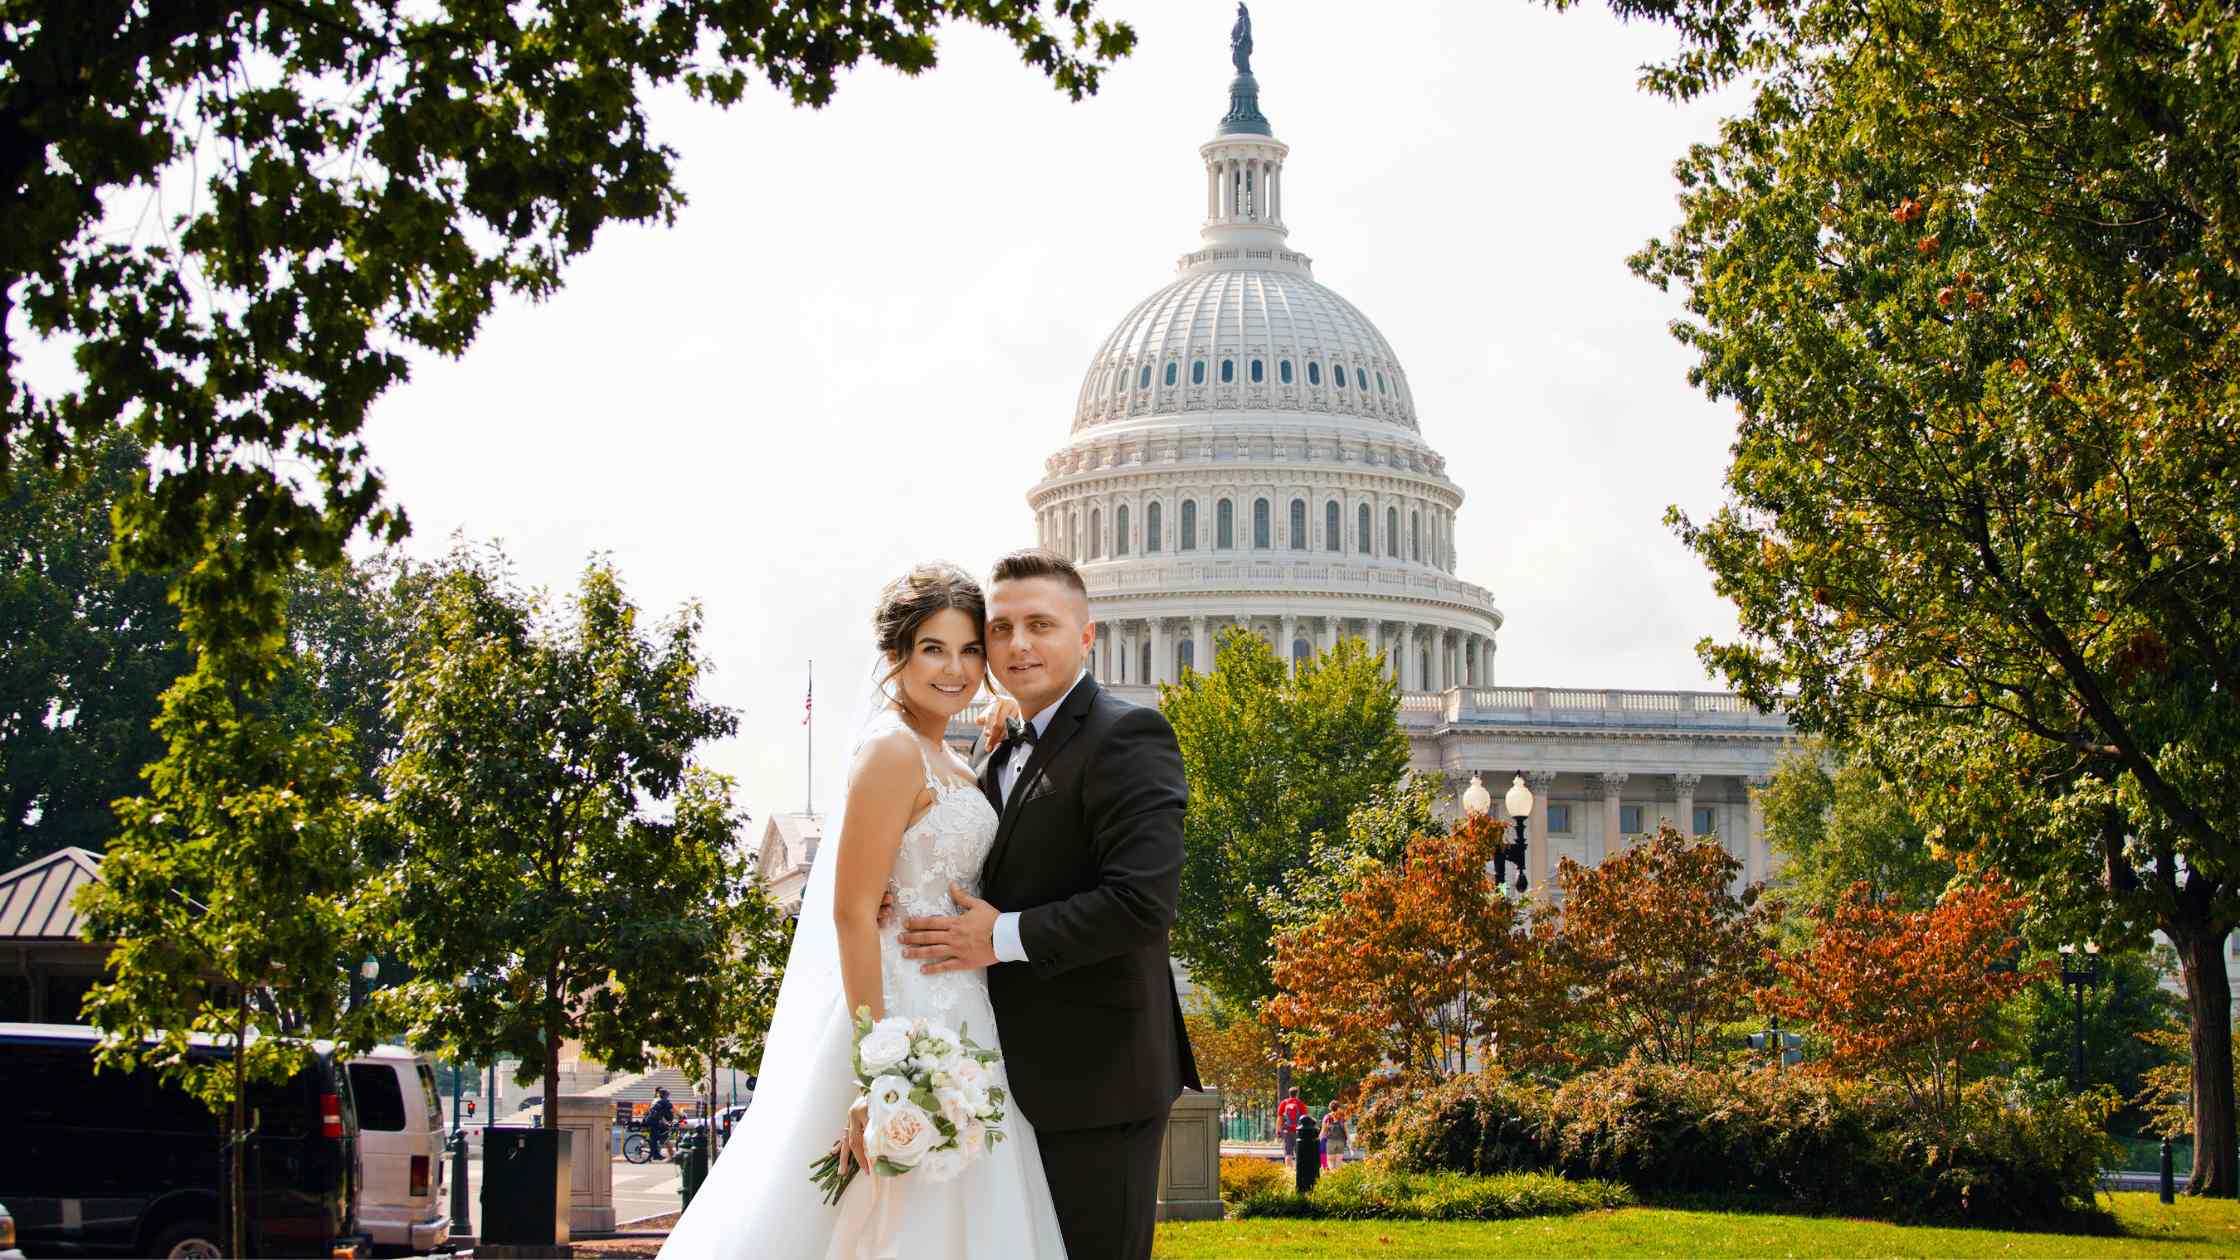 Washington Wedding Planning, Washington Wedding Photographers, Your Complete Wedding Planning Resource